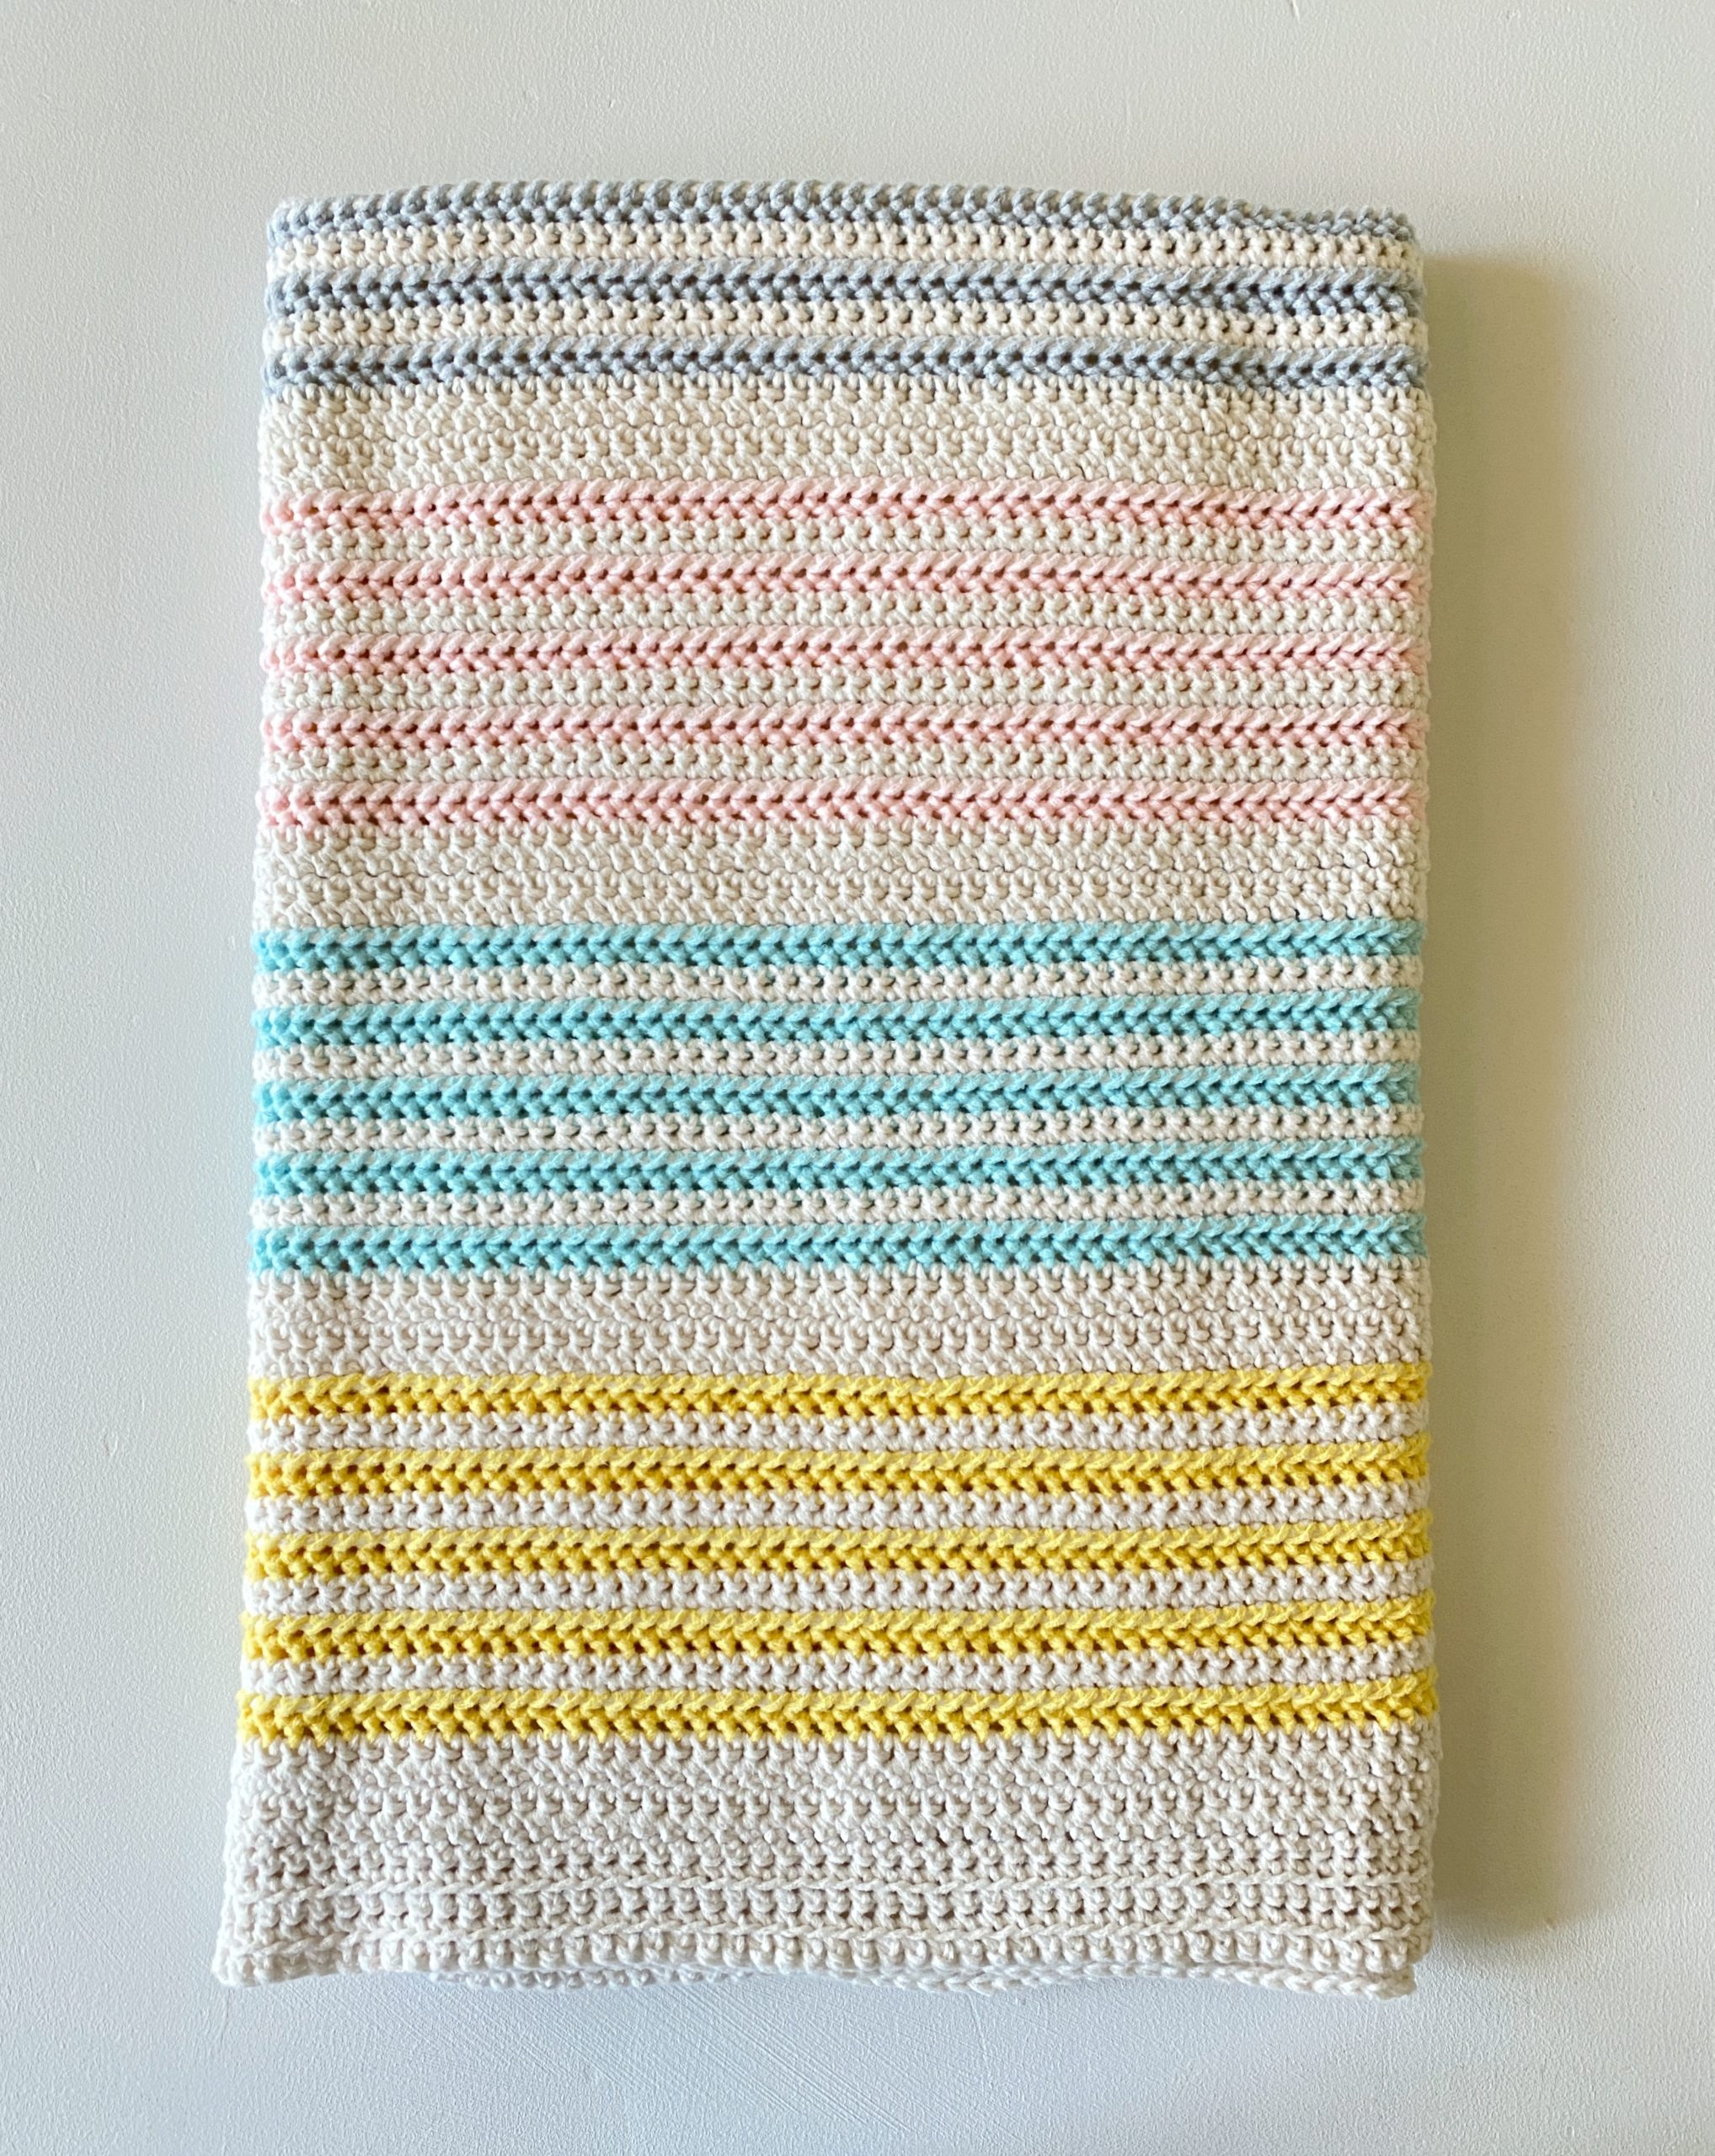 Crochet Bundle Up Stripes Blanket - Daisy Farm Crafts